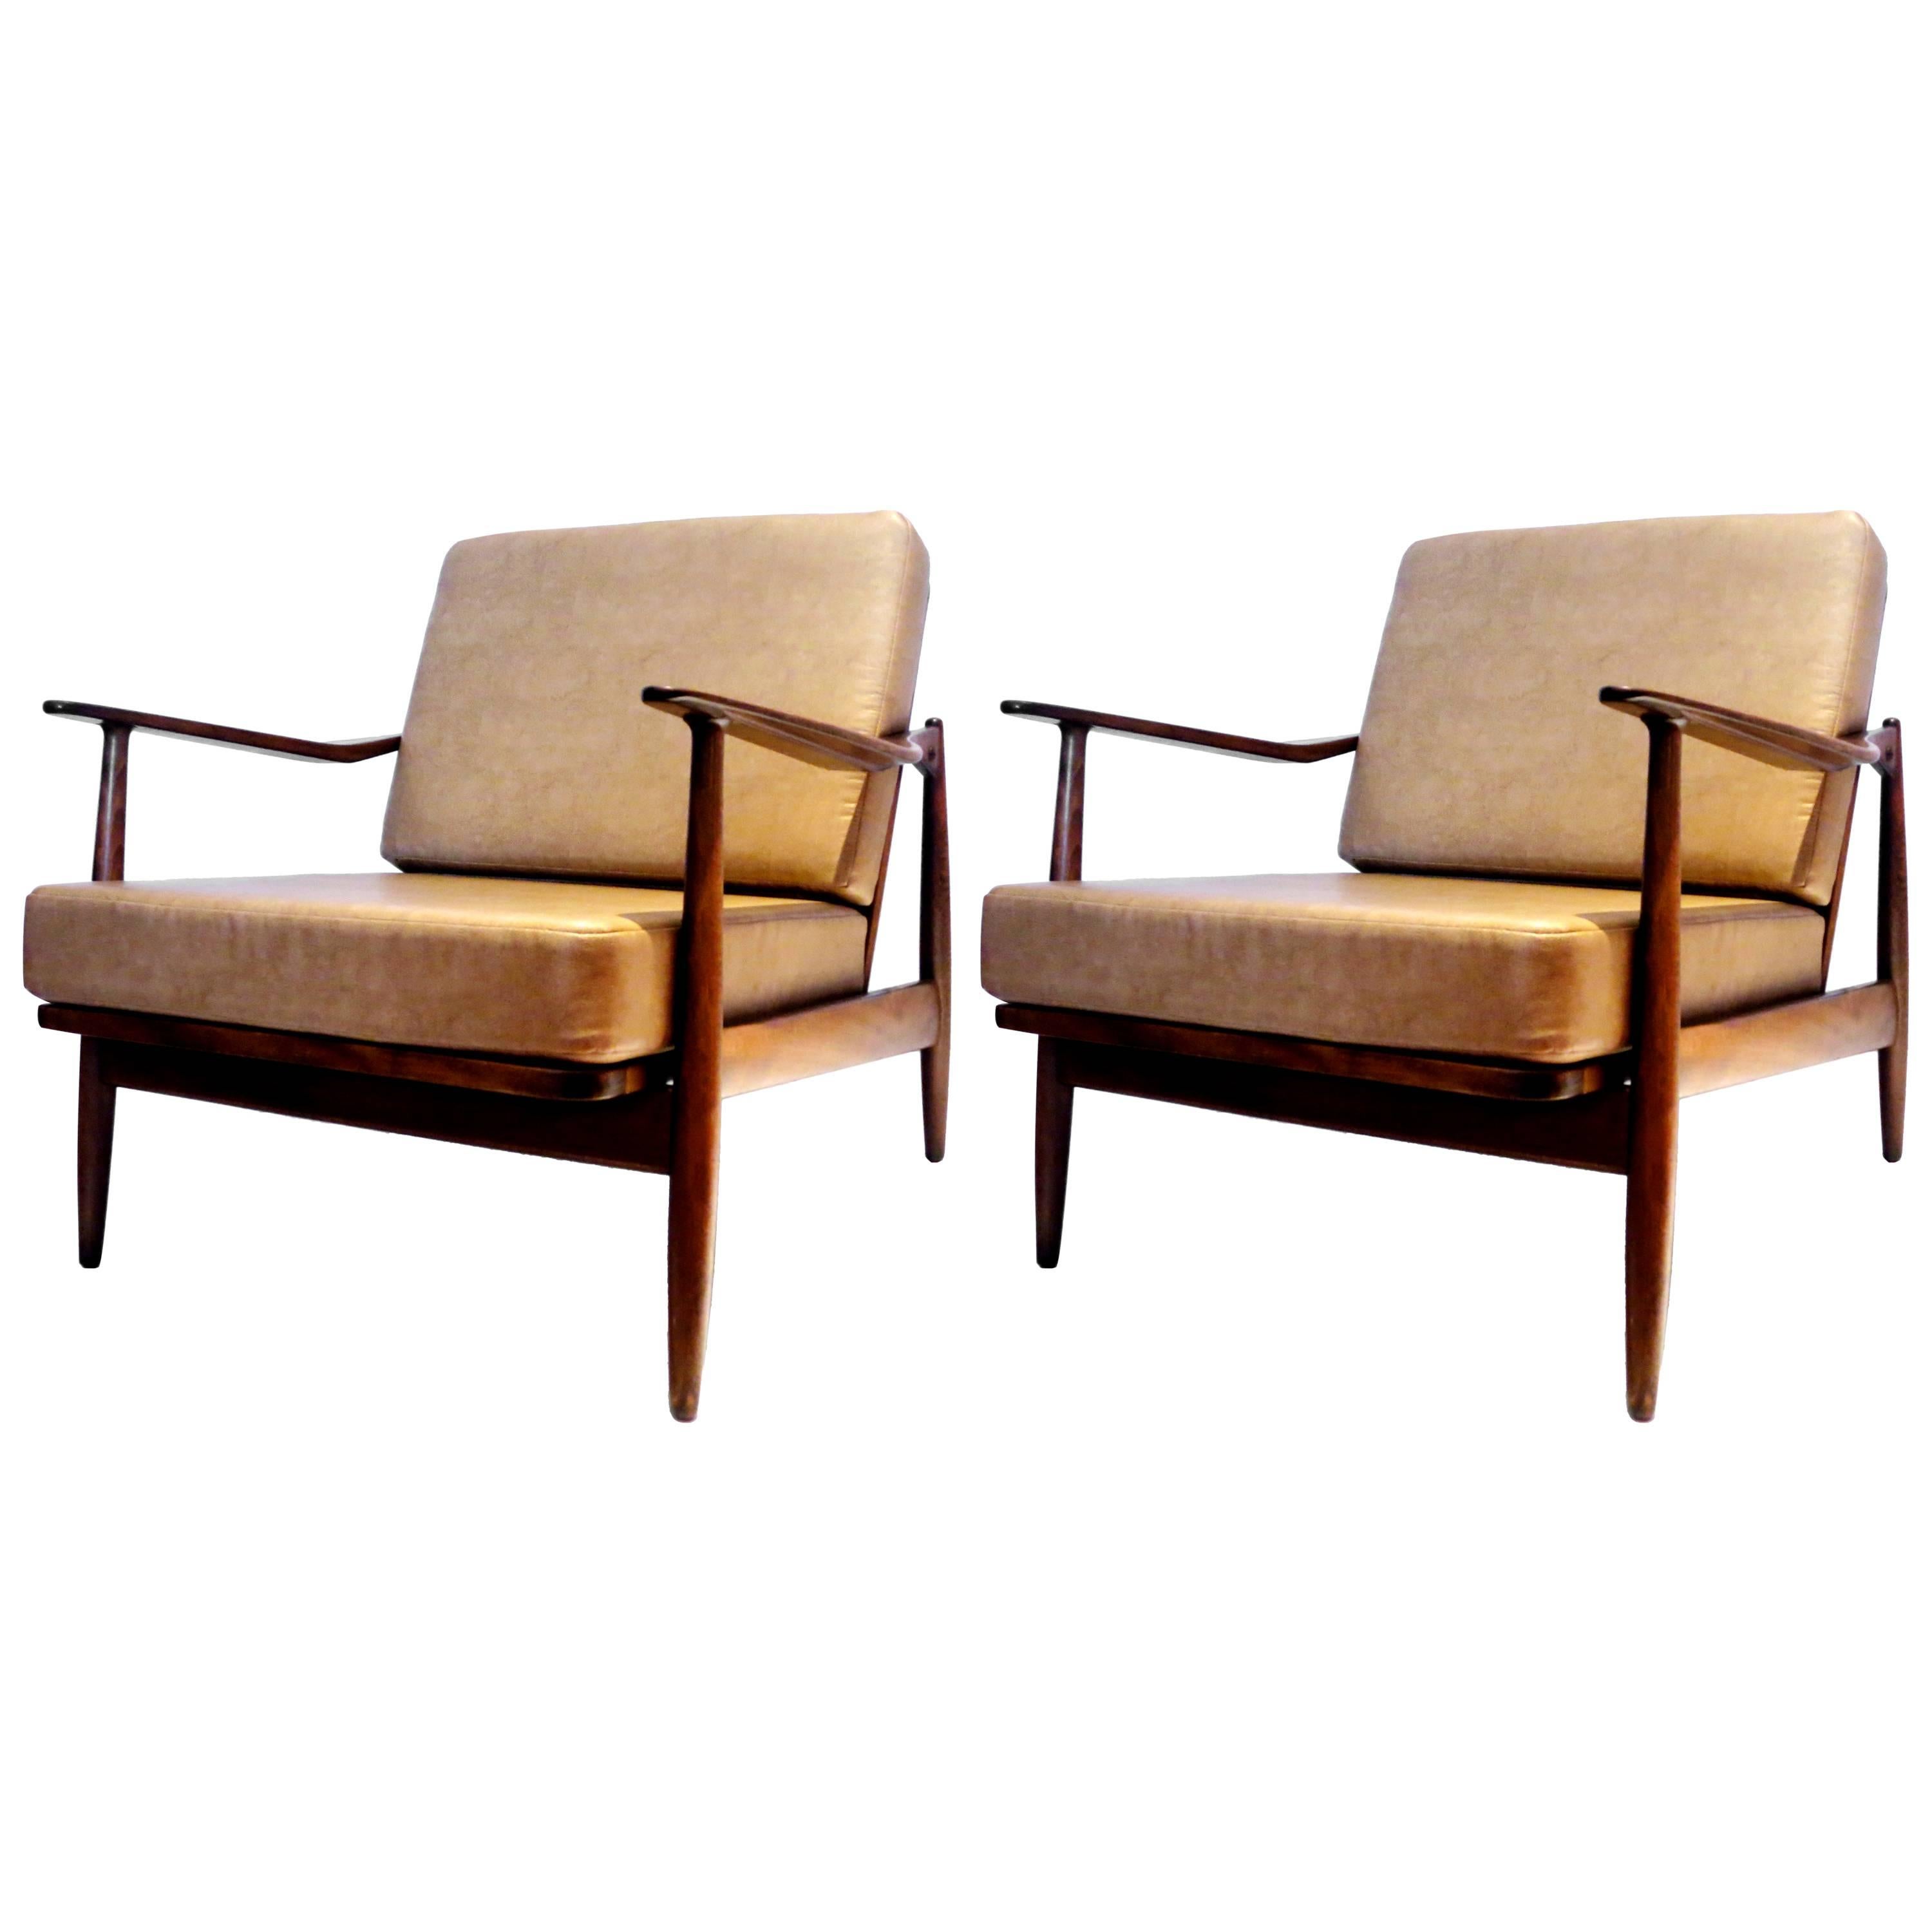 Pair of 1950s Danish modern walnut finish club chairs by Scandia